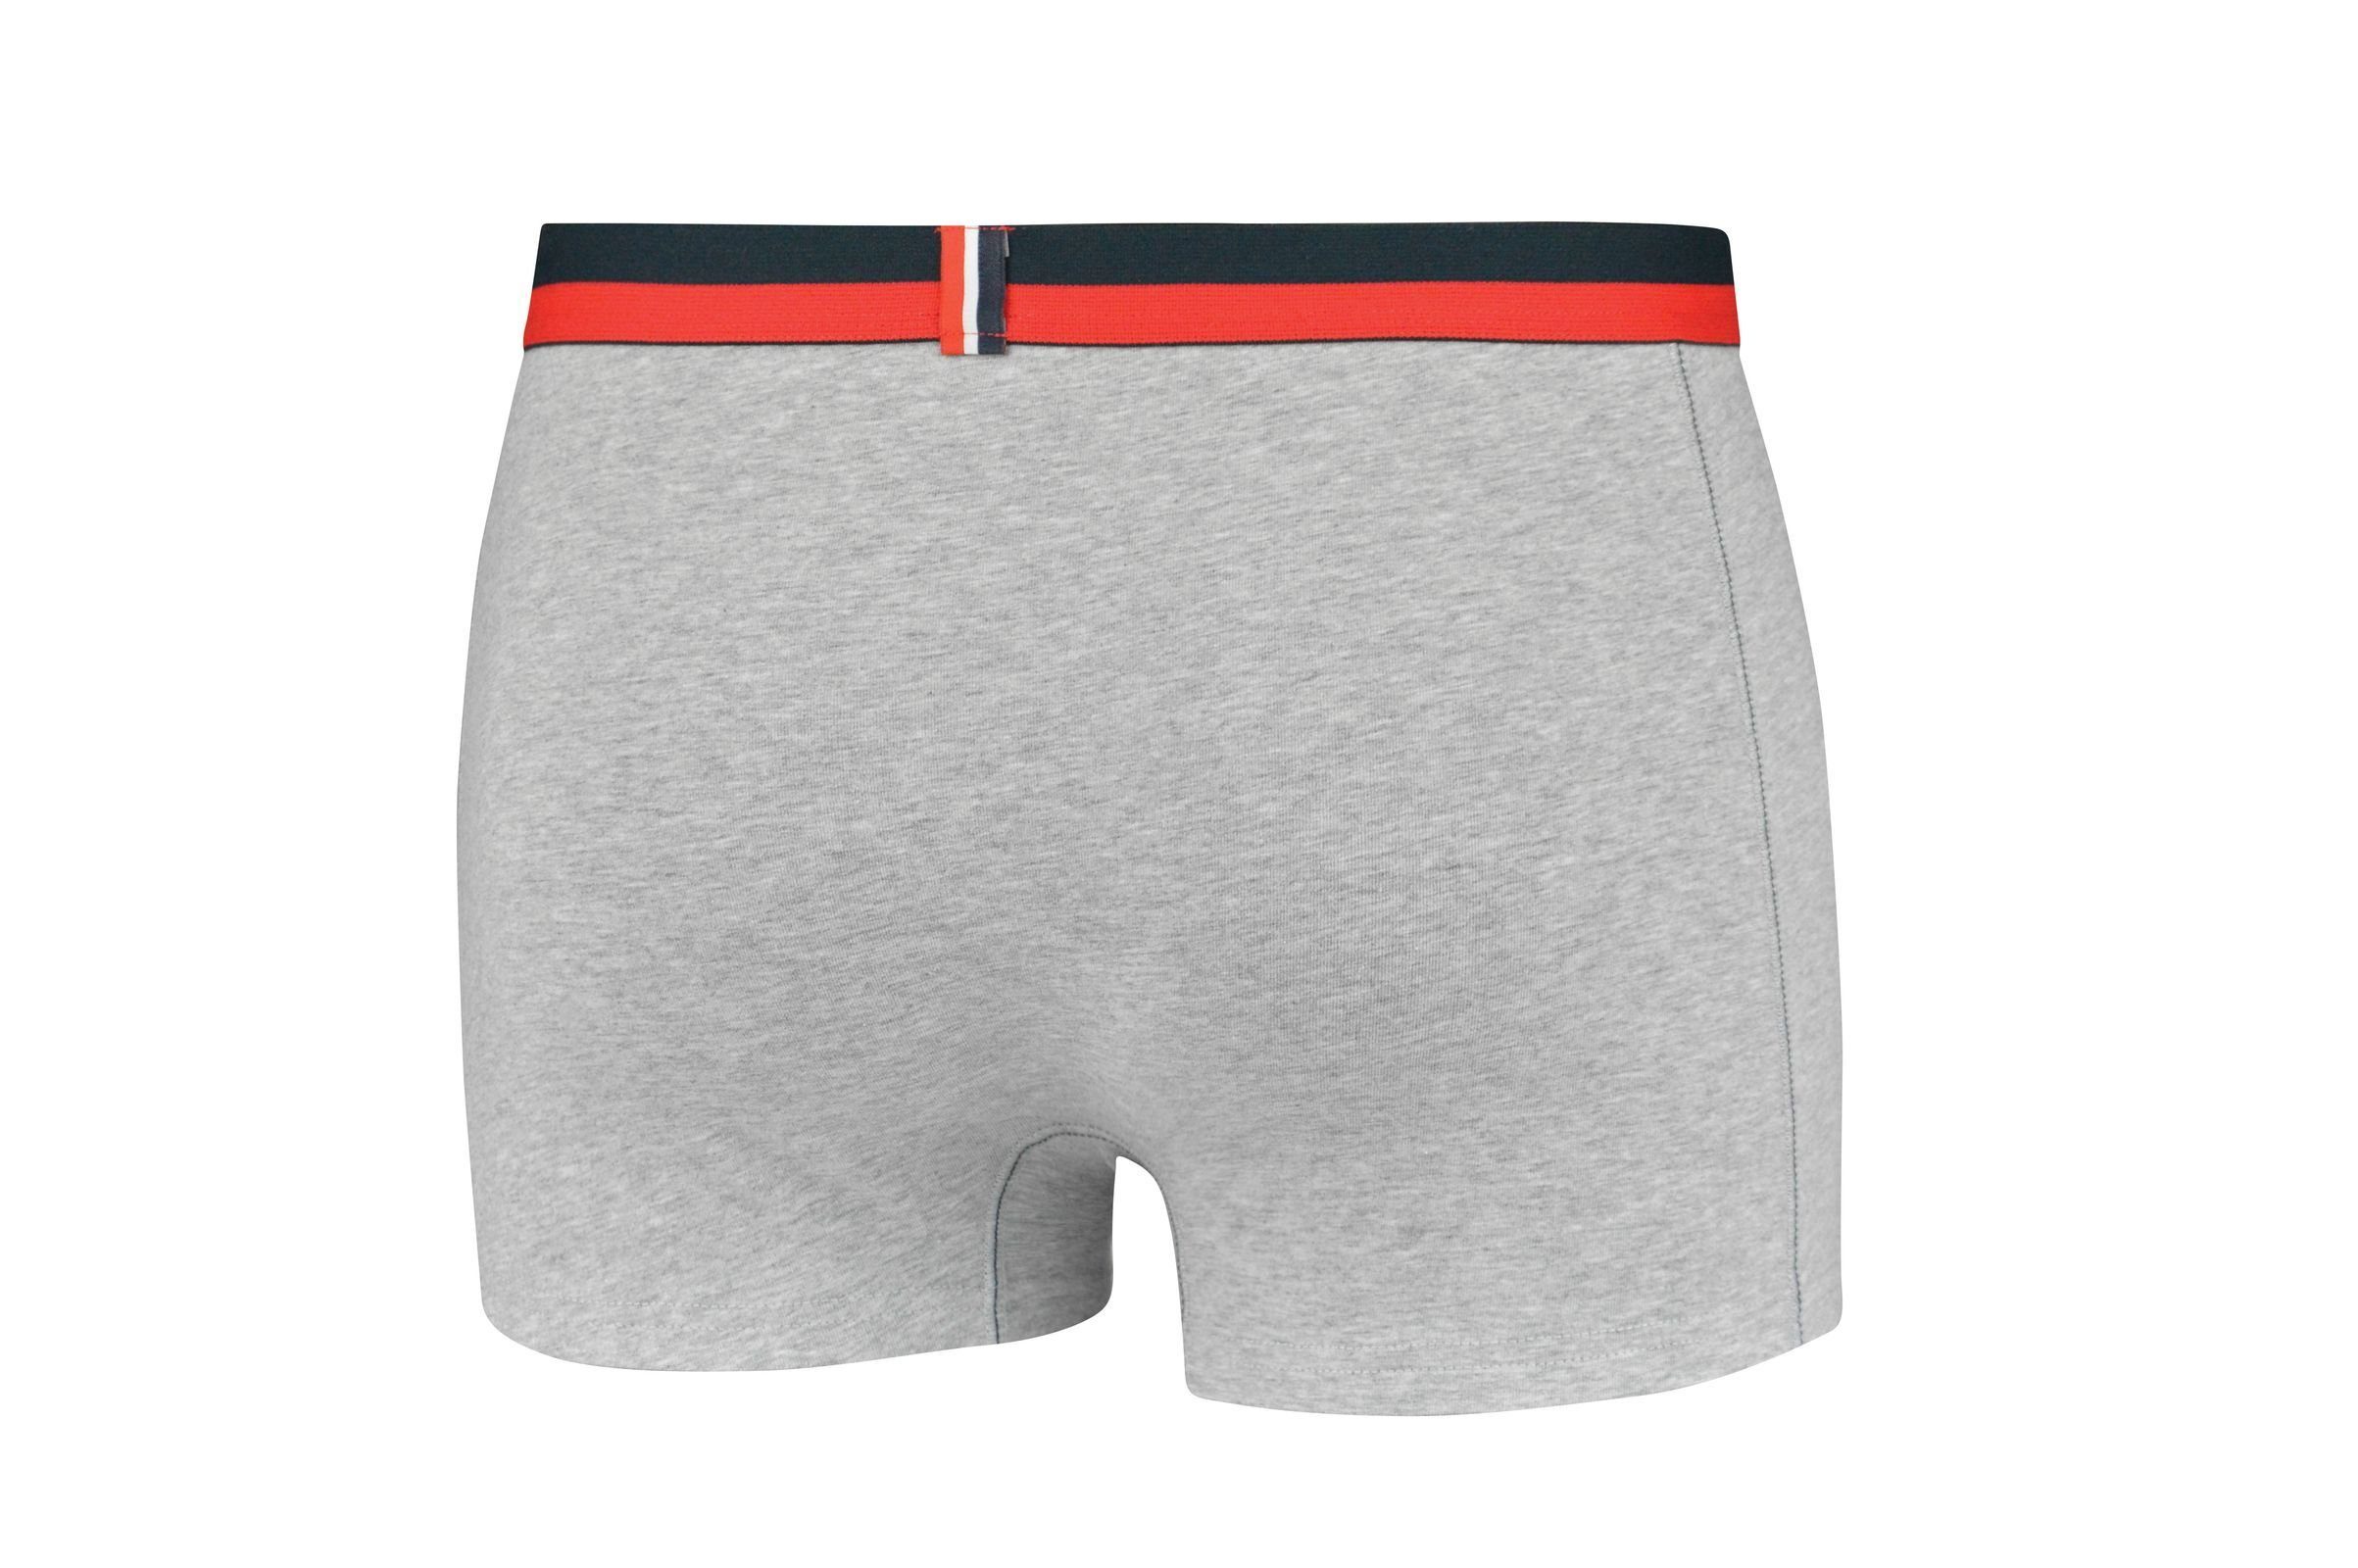 Herren Boxer - Fila Cotton Grau Logobund, Shorts Urban, Boxer